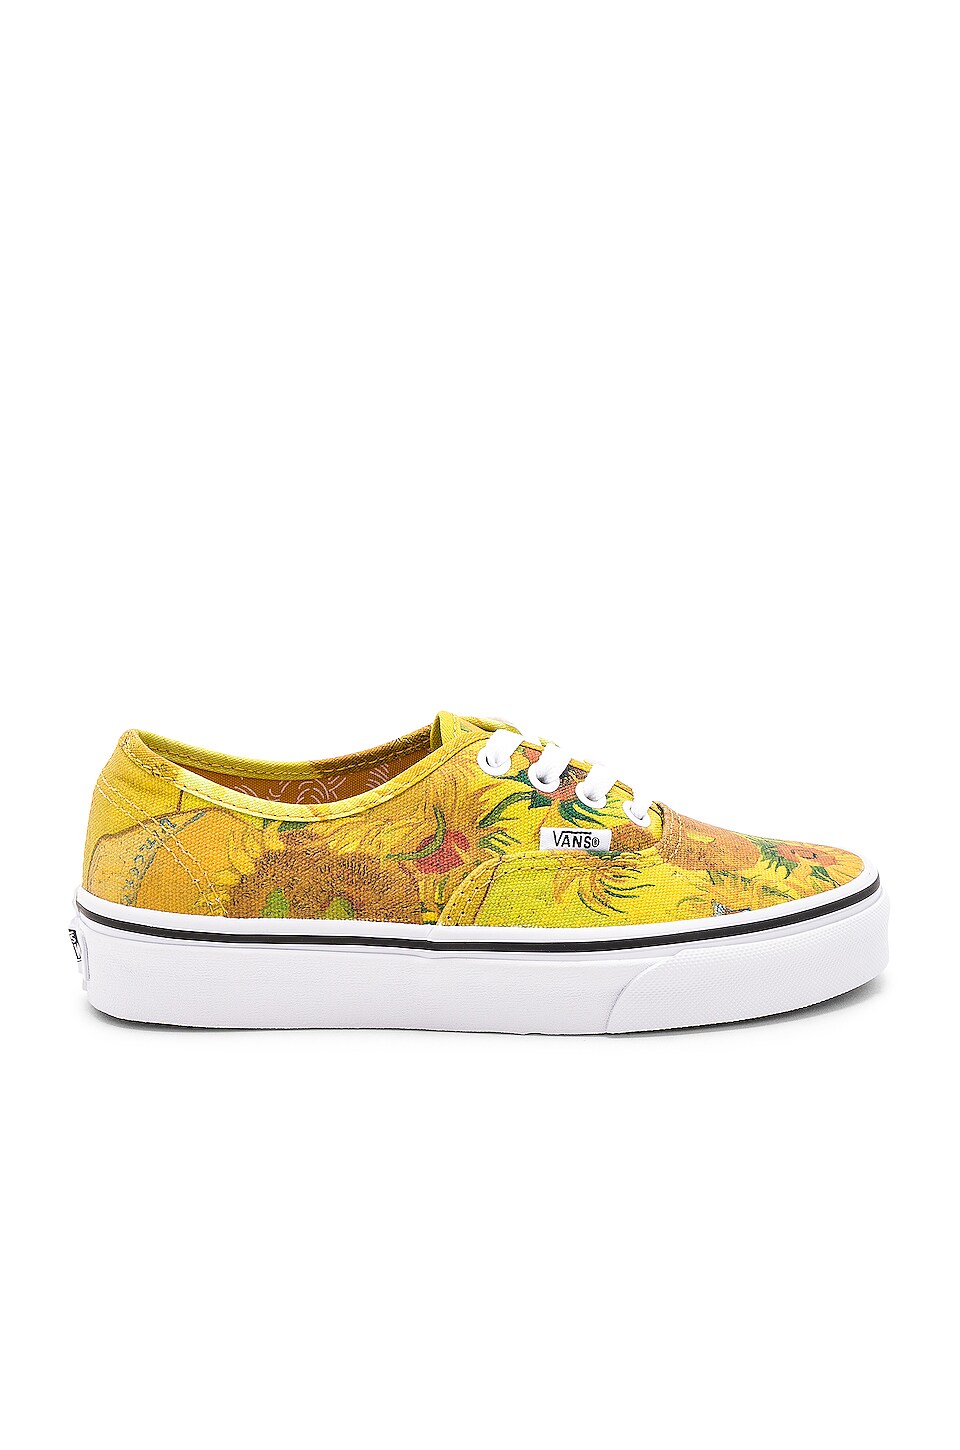 vans van gogh sunflower shoes